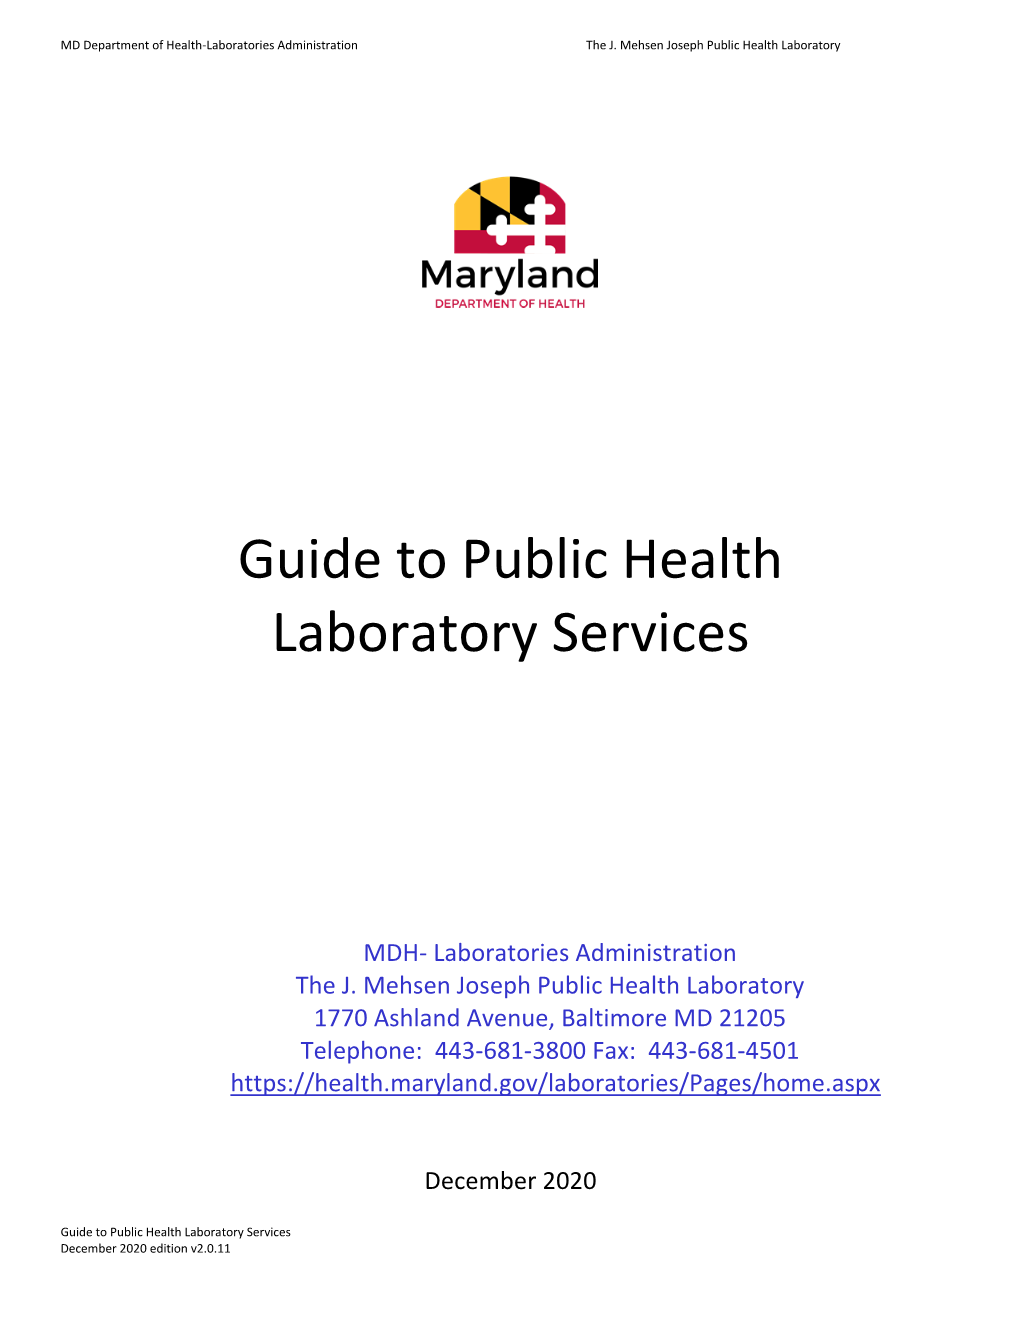 Guide to Public Health Laboratory Services